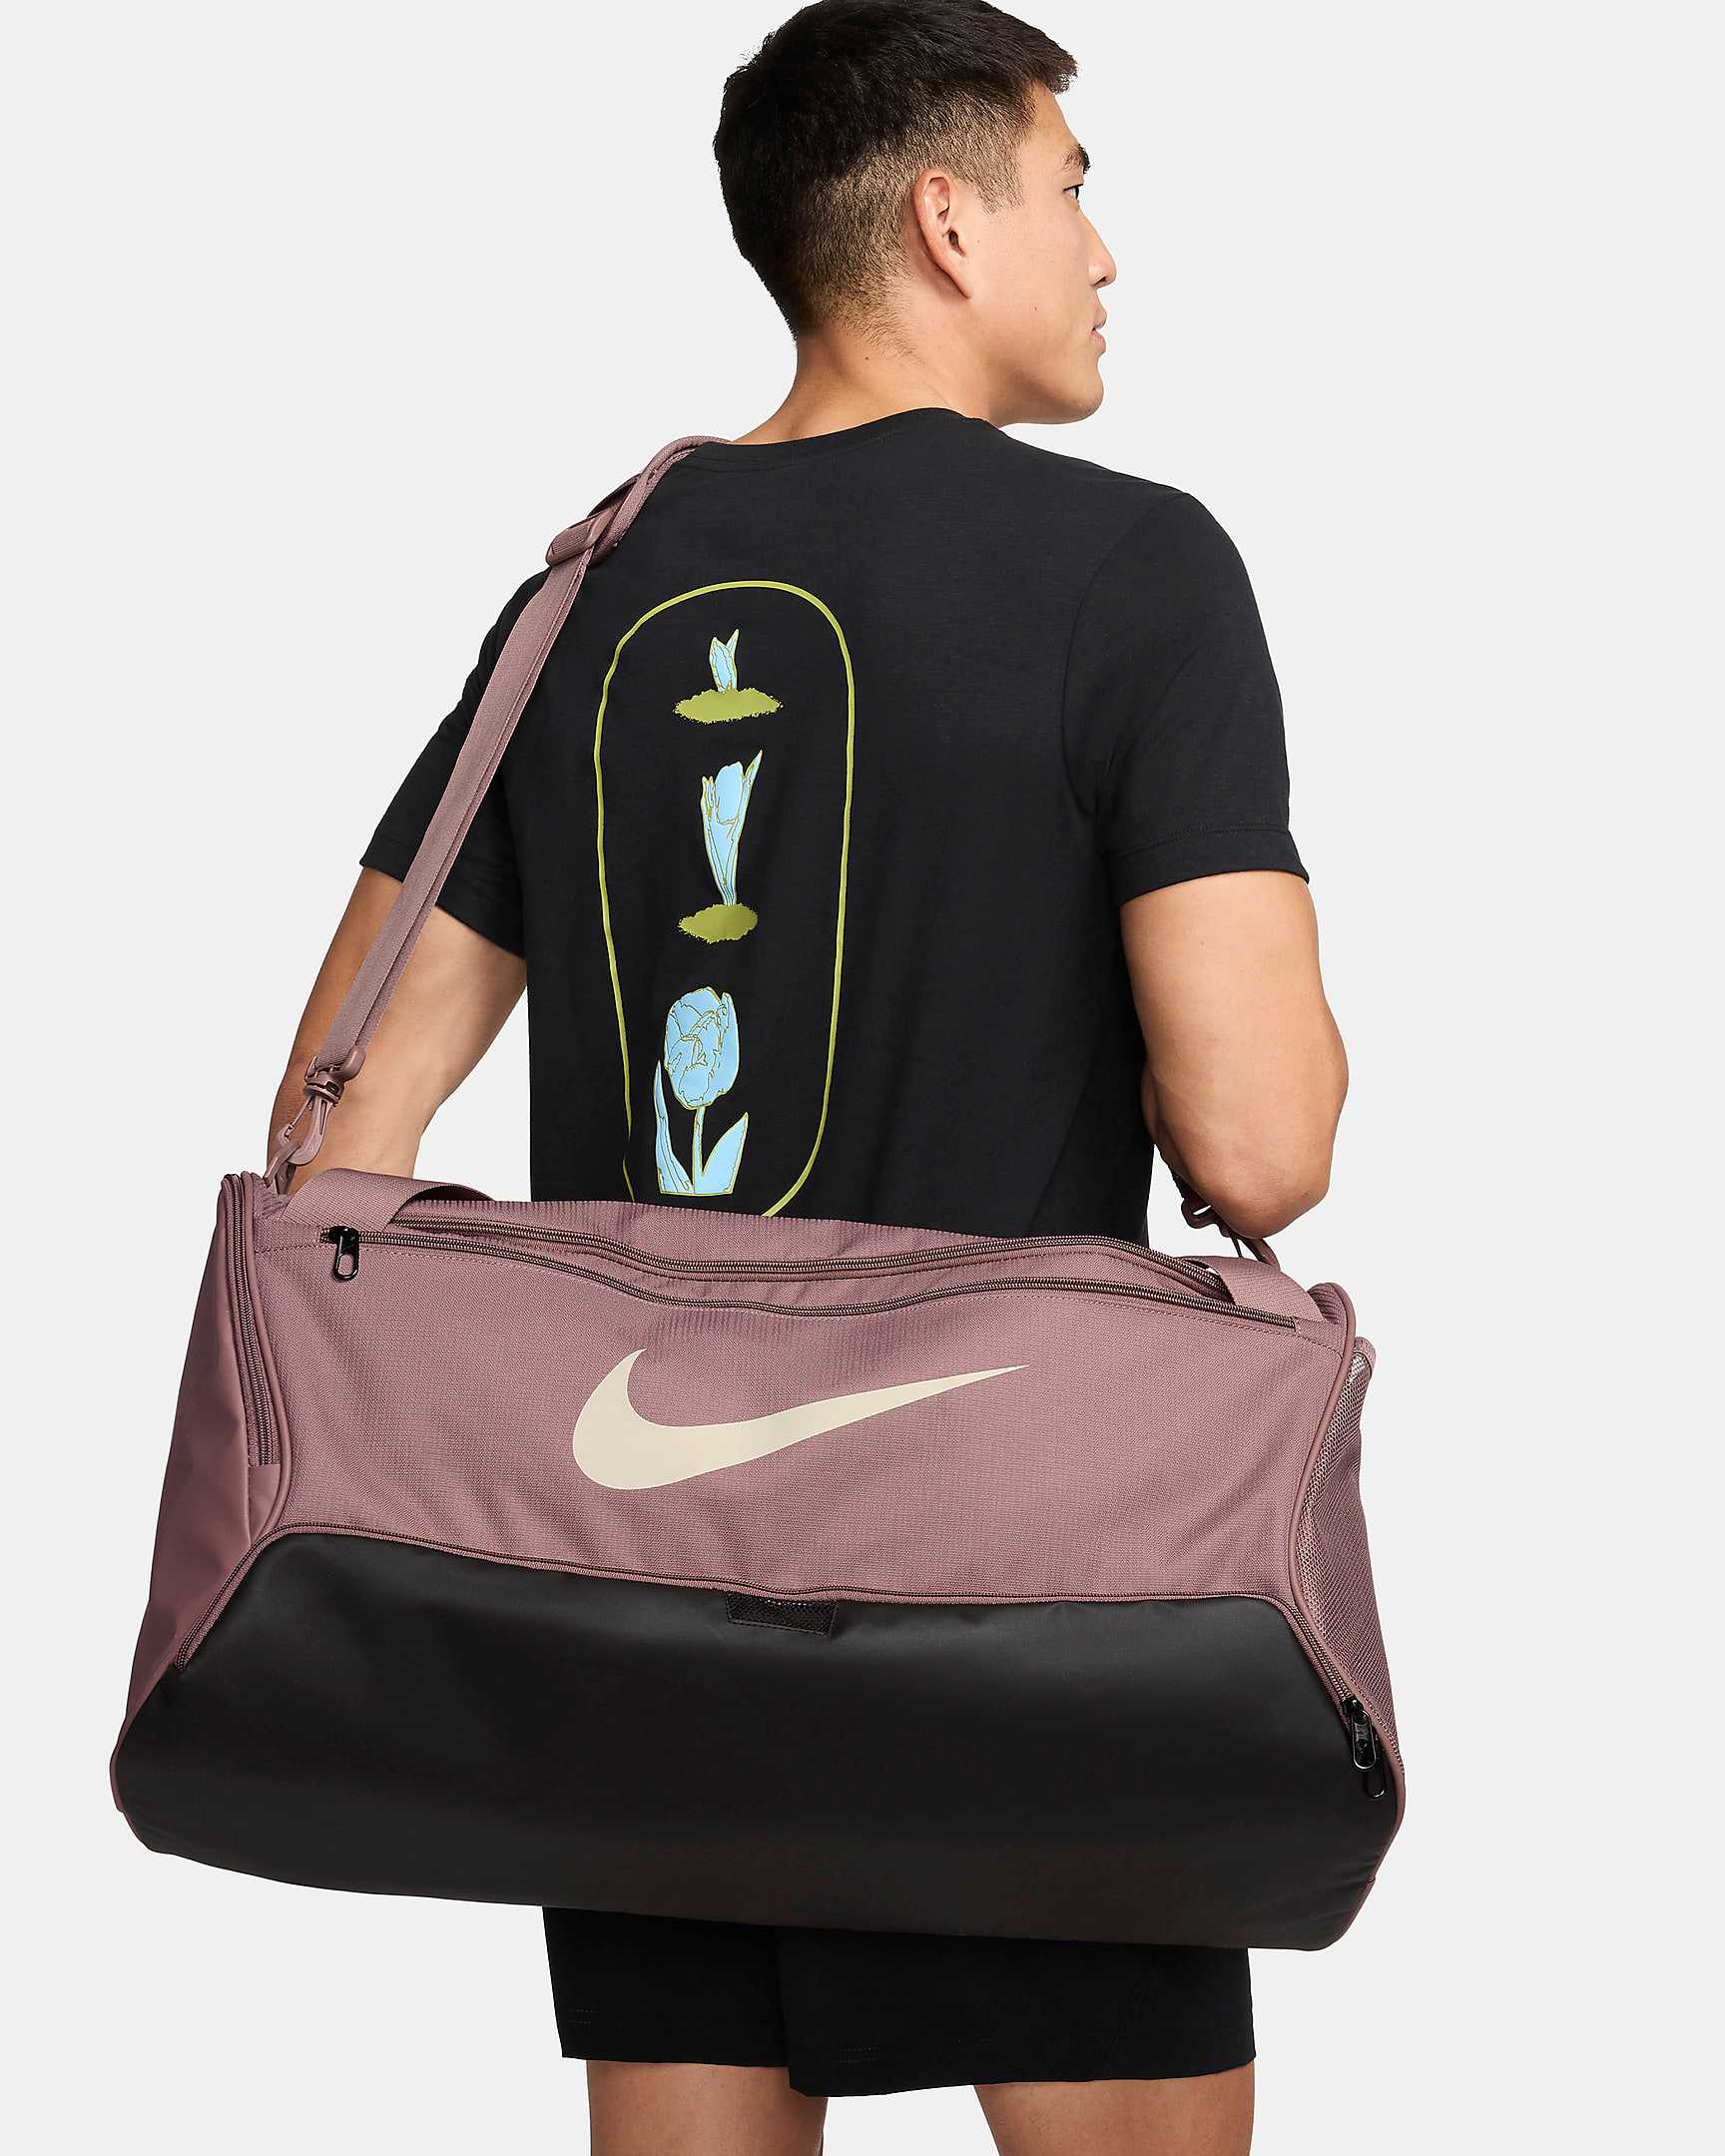 Gym Bag For Men Waterproof Fitness Accessories Yoga Handbag